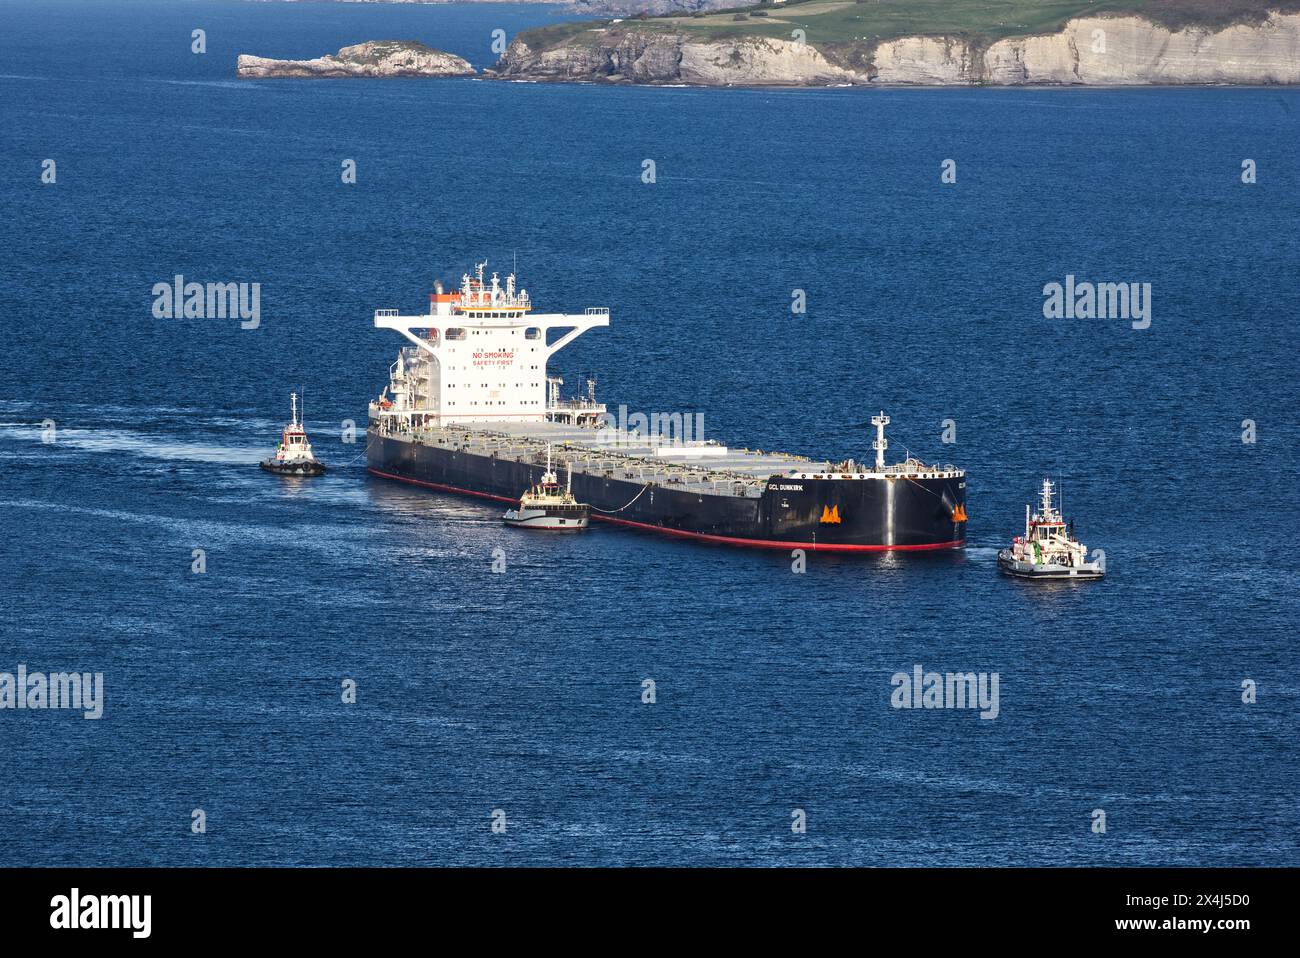 Vessel, GCL Dunkirk, solids bulk carrier, performing docking maneuvers at the Ingeniero León dock. Puerto del Musel, Gijón, Asturias, Spain Stock Photo